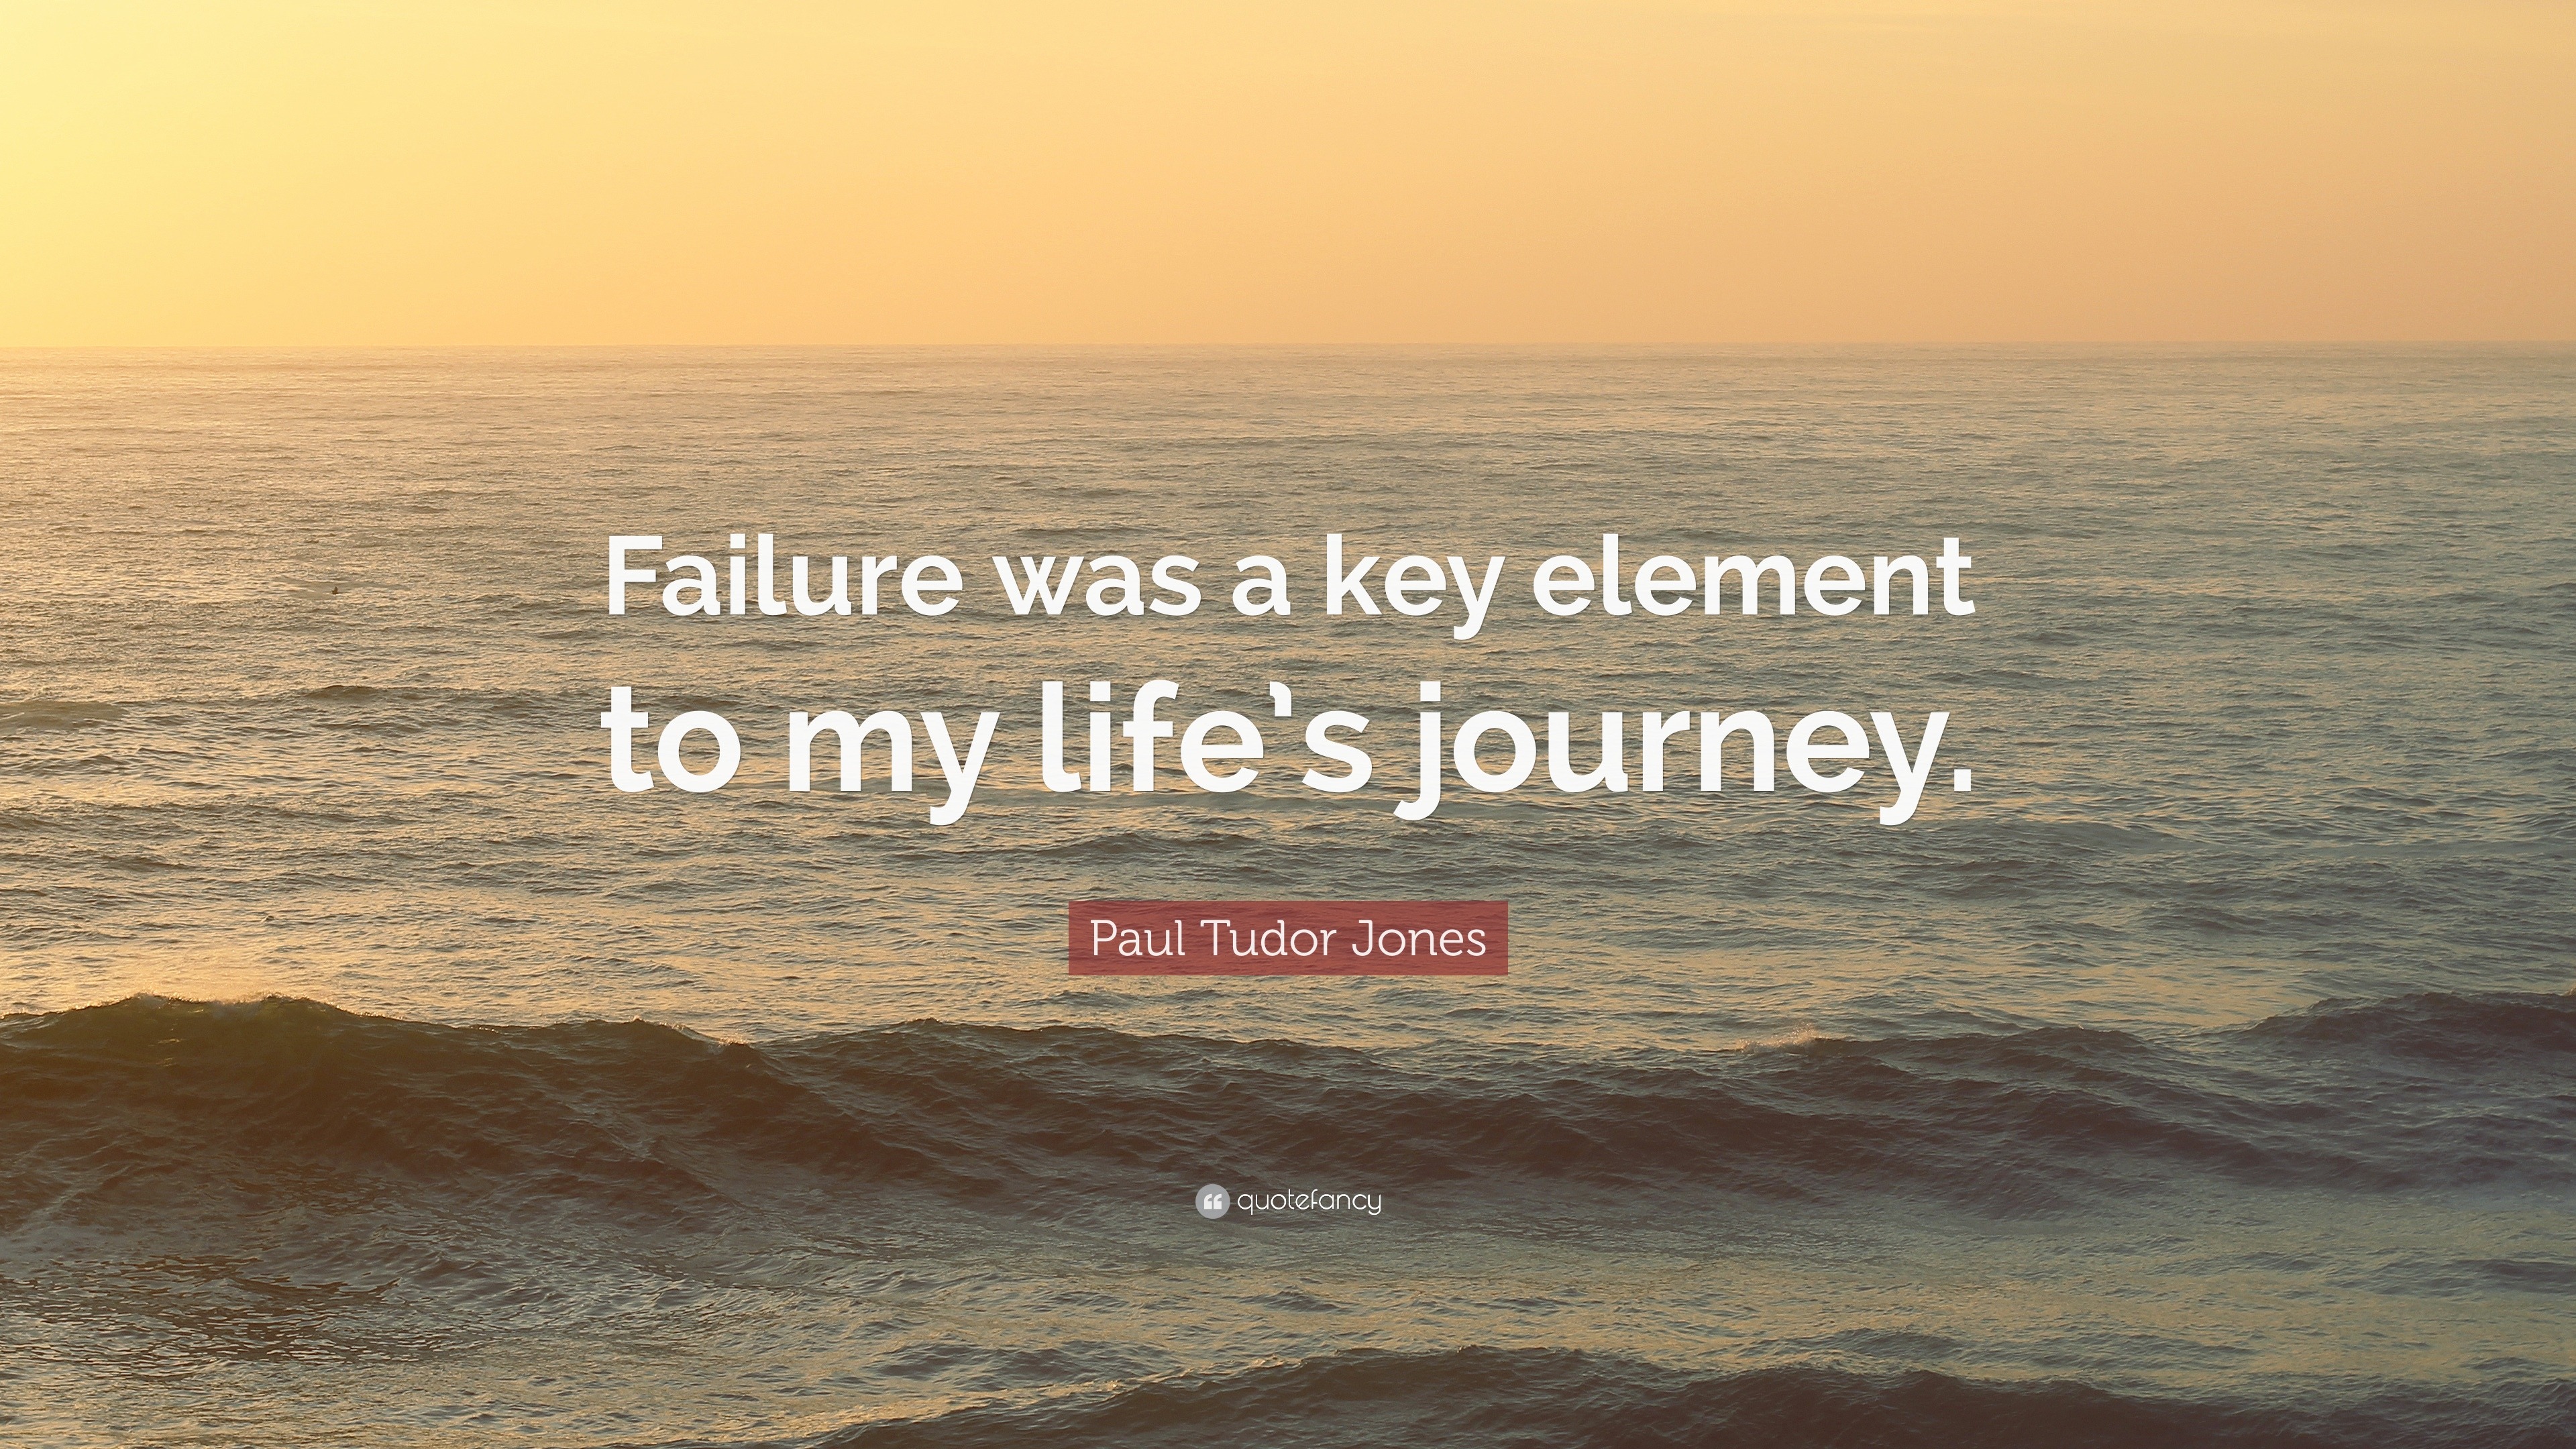 Paul Tudor Jones Quote “Failure was a key element to my life s journey